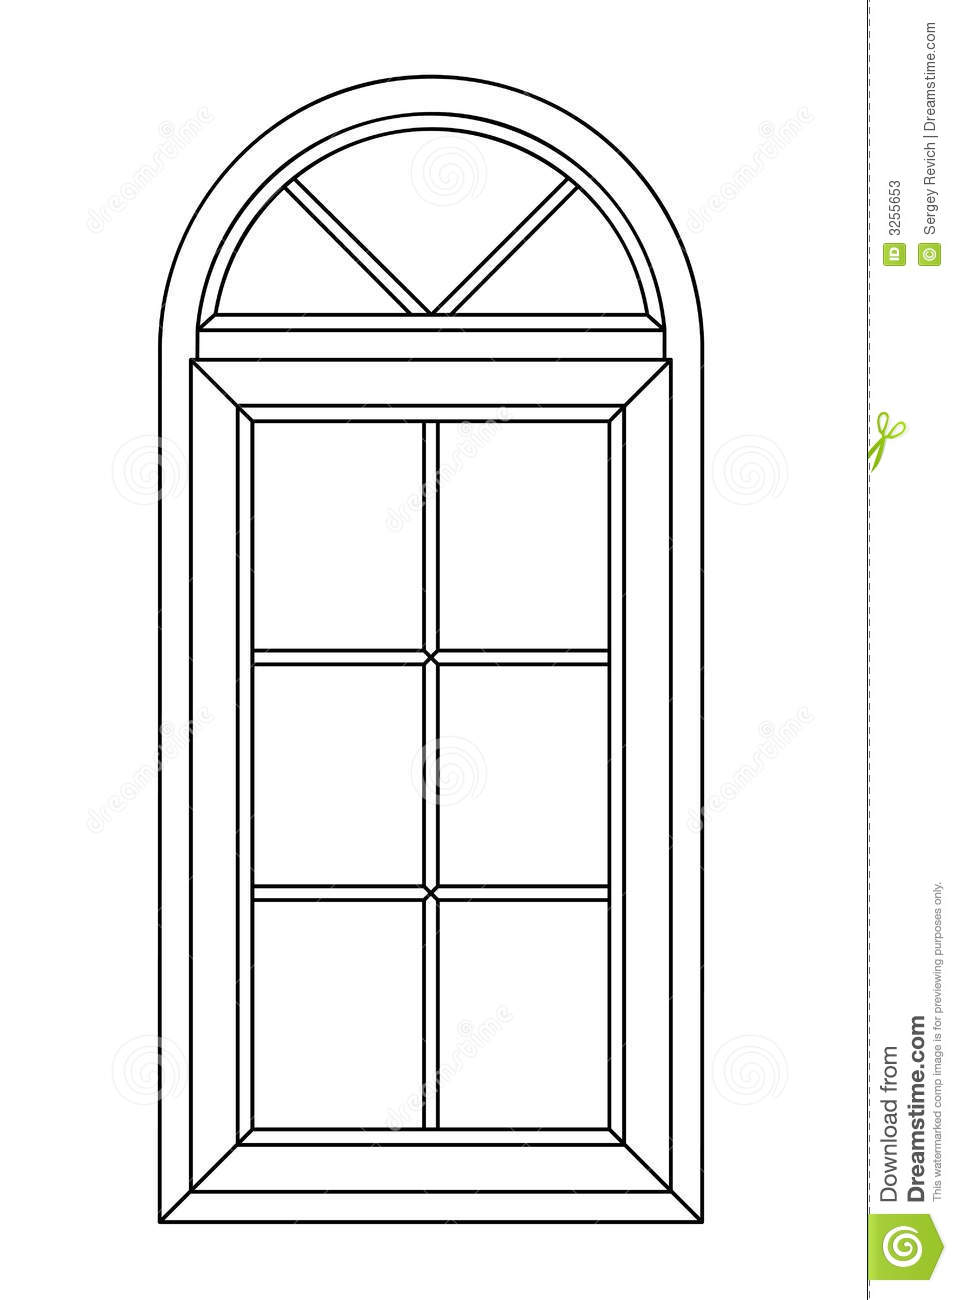 Planimetric Arch Window Stock .